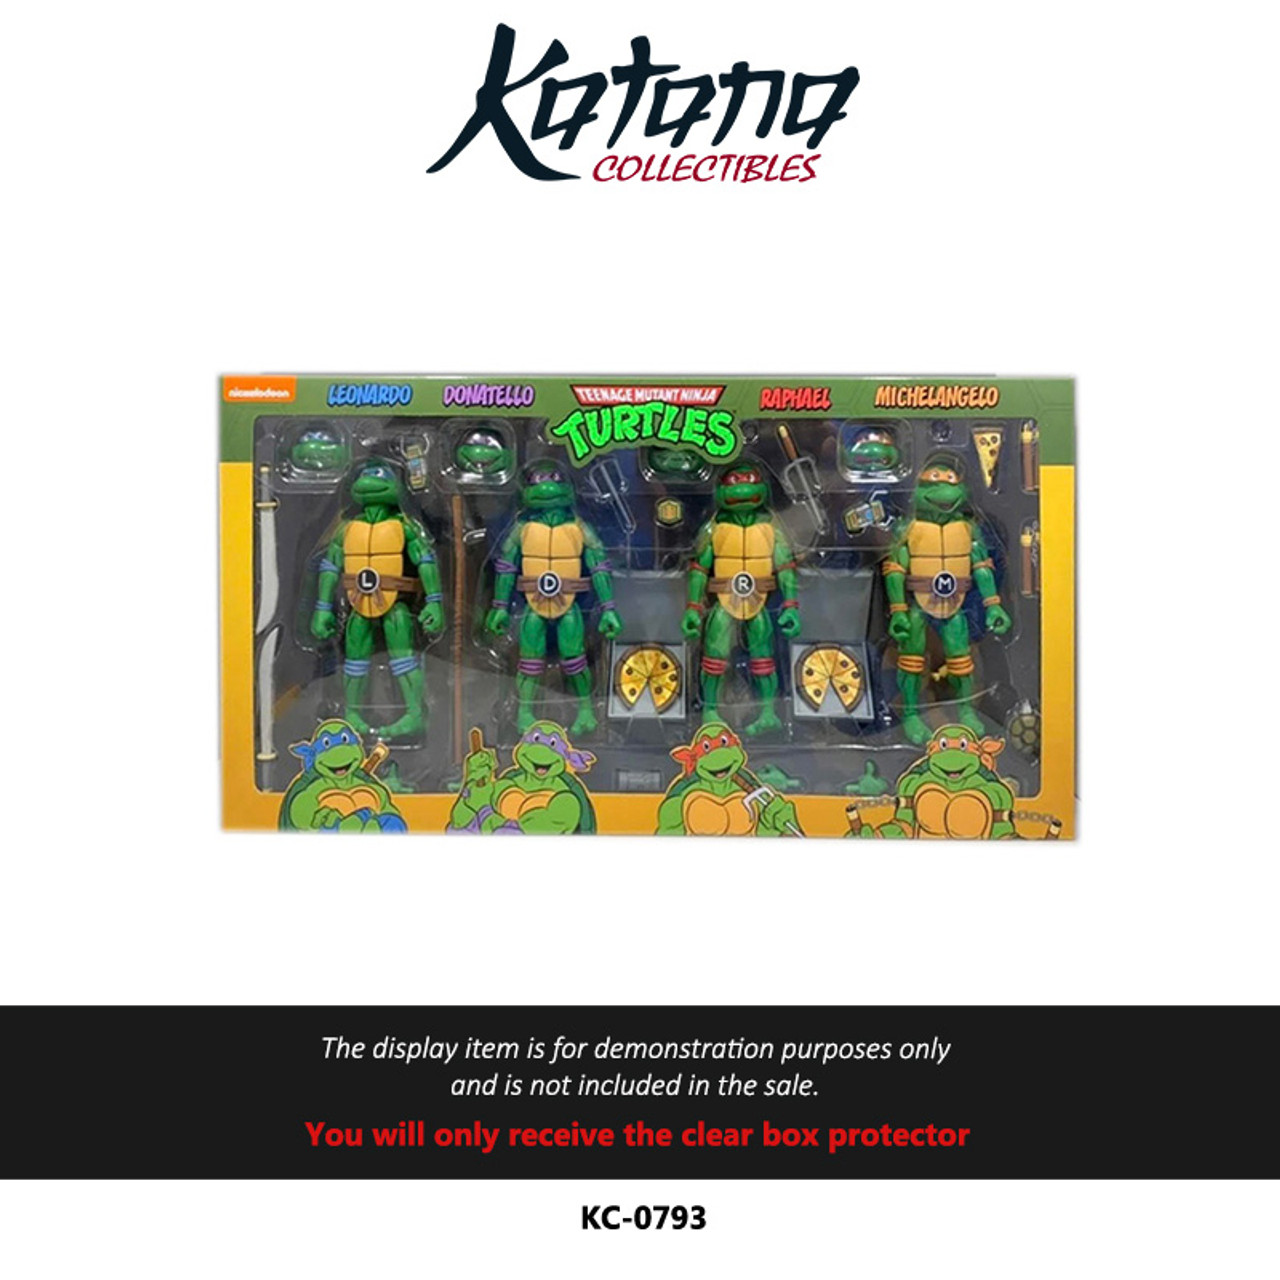 Katana Collectibles Protector For NECA Leonardo, Donatello, Raphael, Michelangelo Style Guide 4-Pack Figures